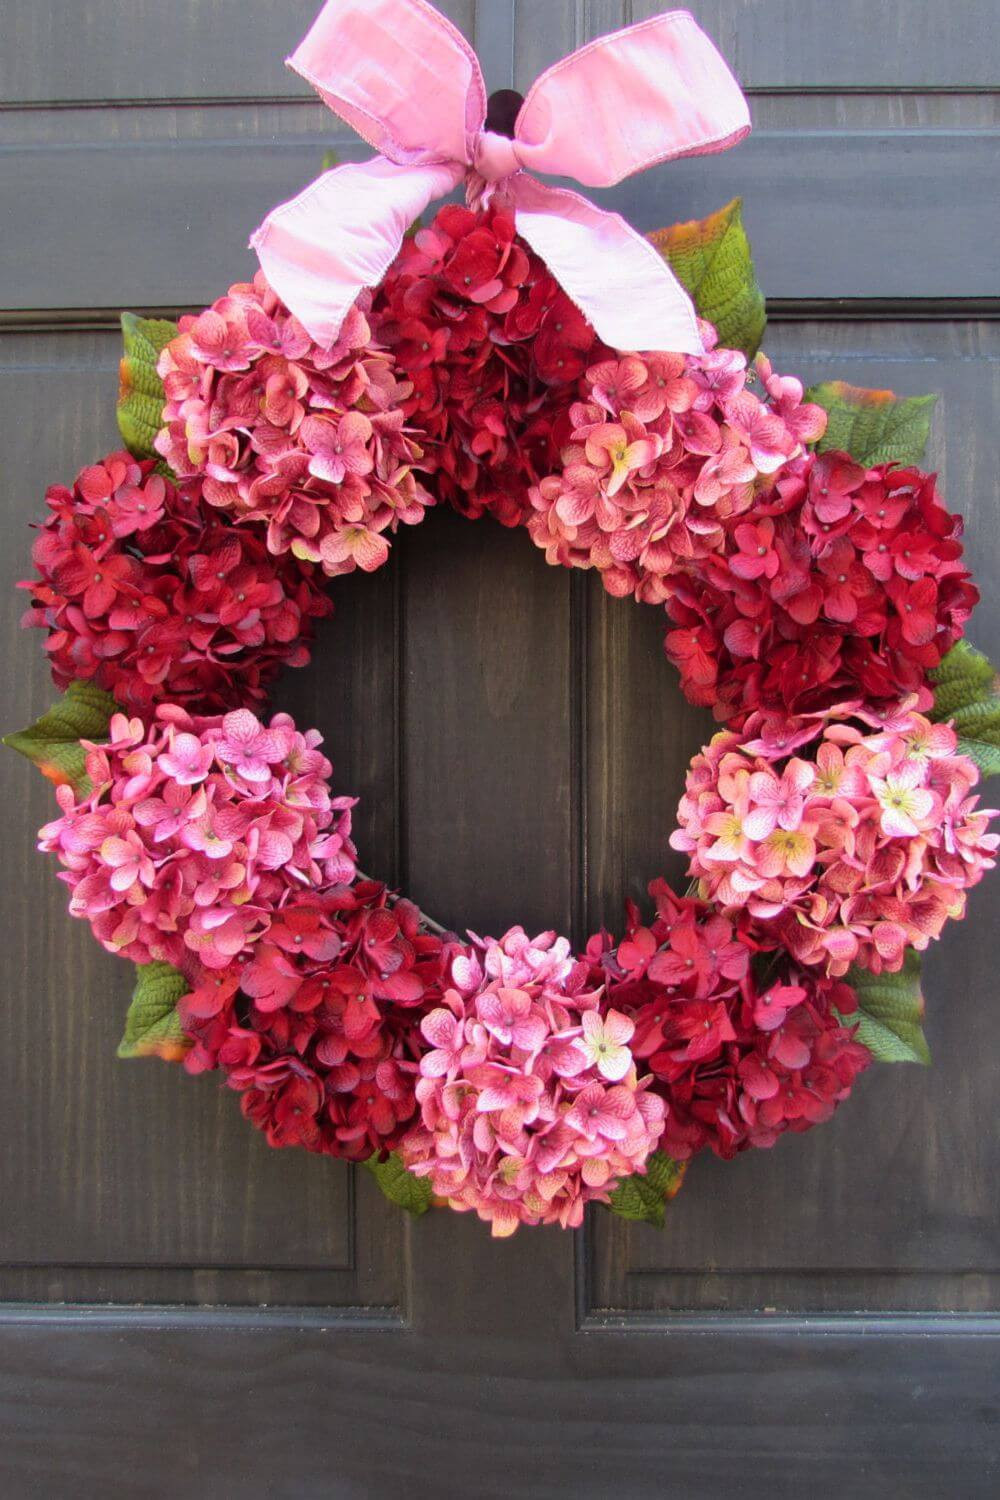 Valentines Day Wreath Ideas
 Get Best Valentine Wreath Ideas and Make This Day Special